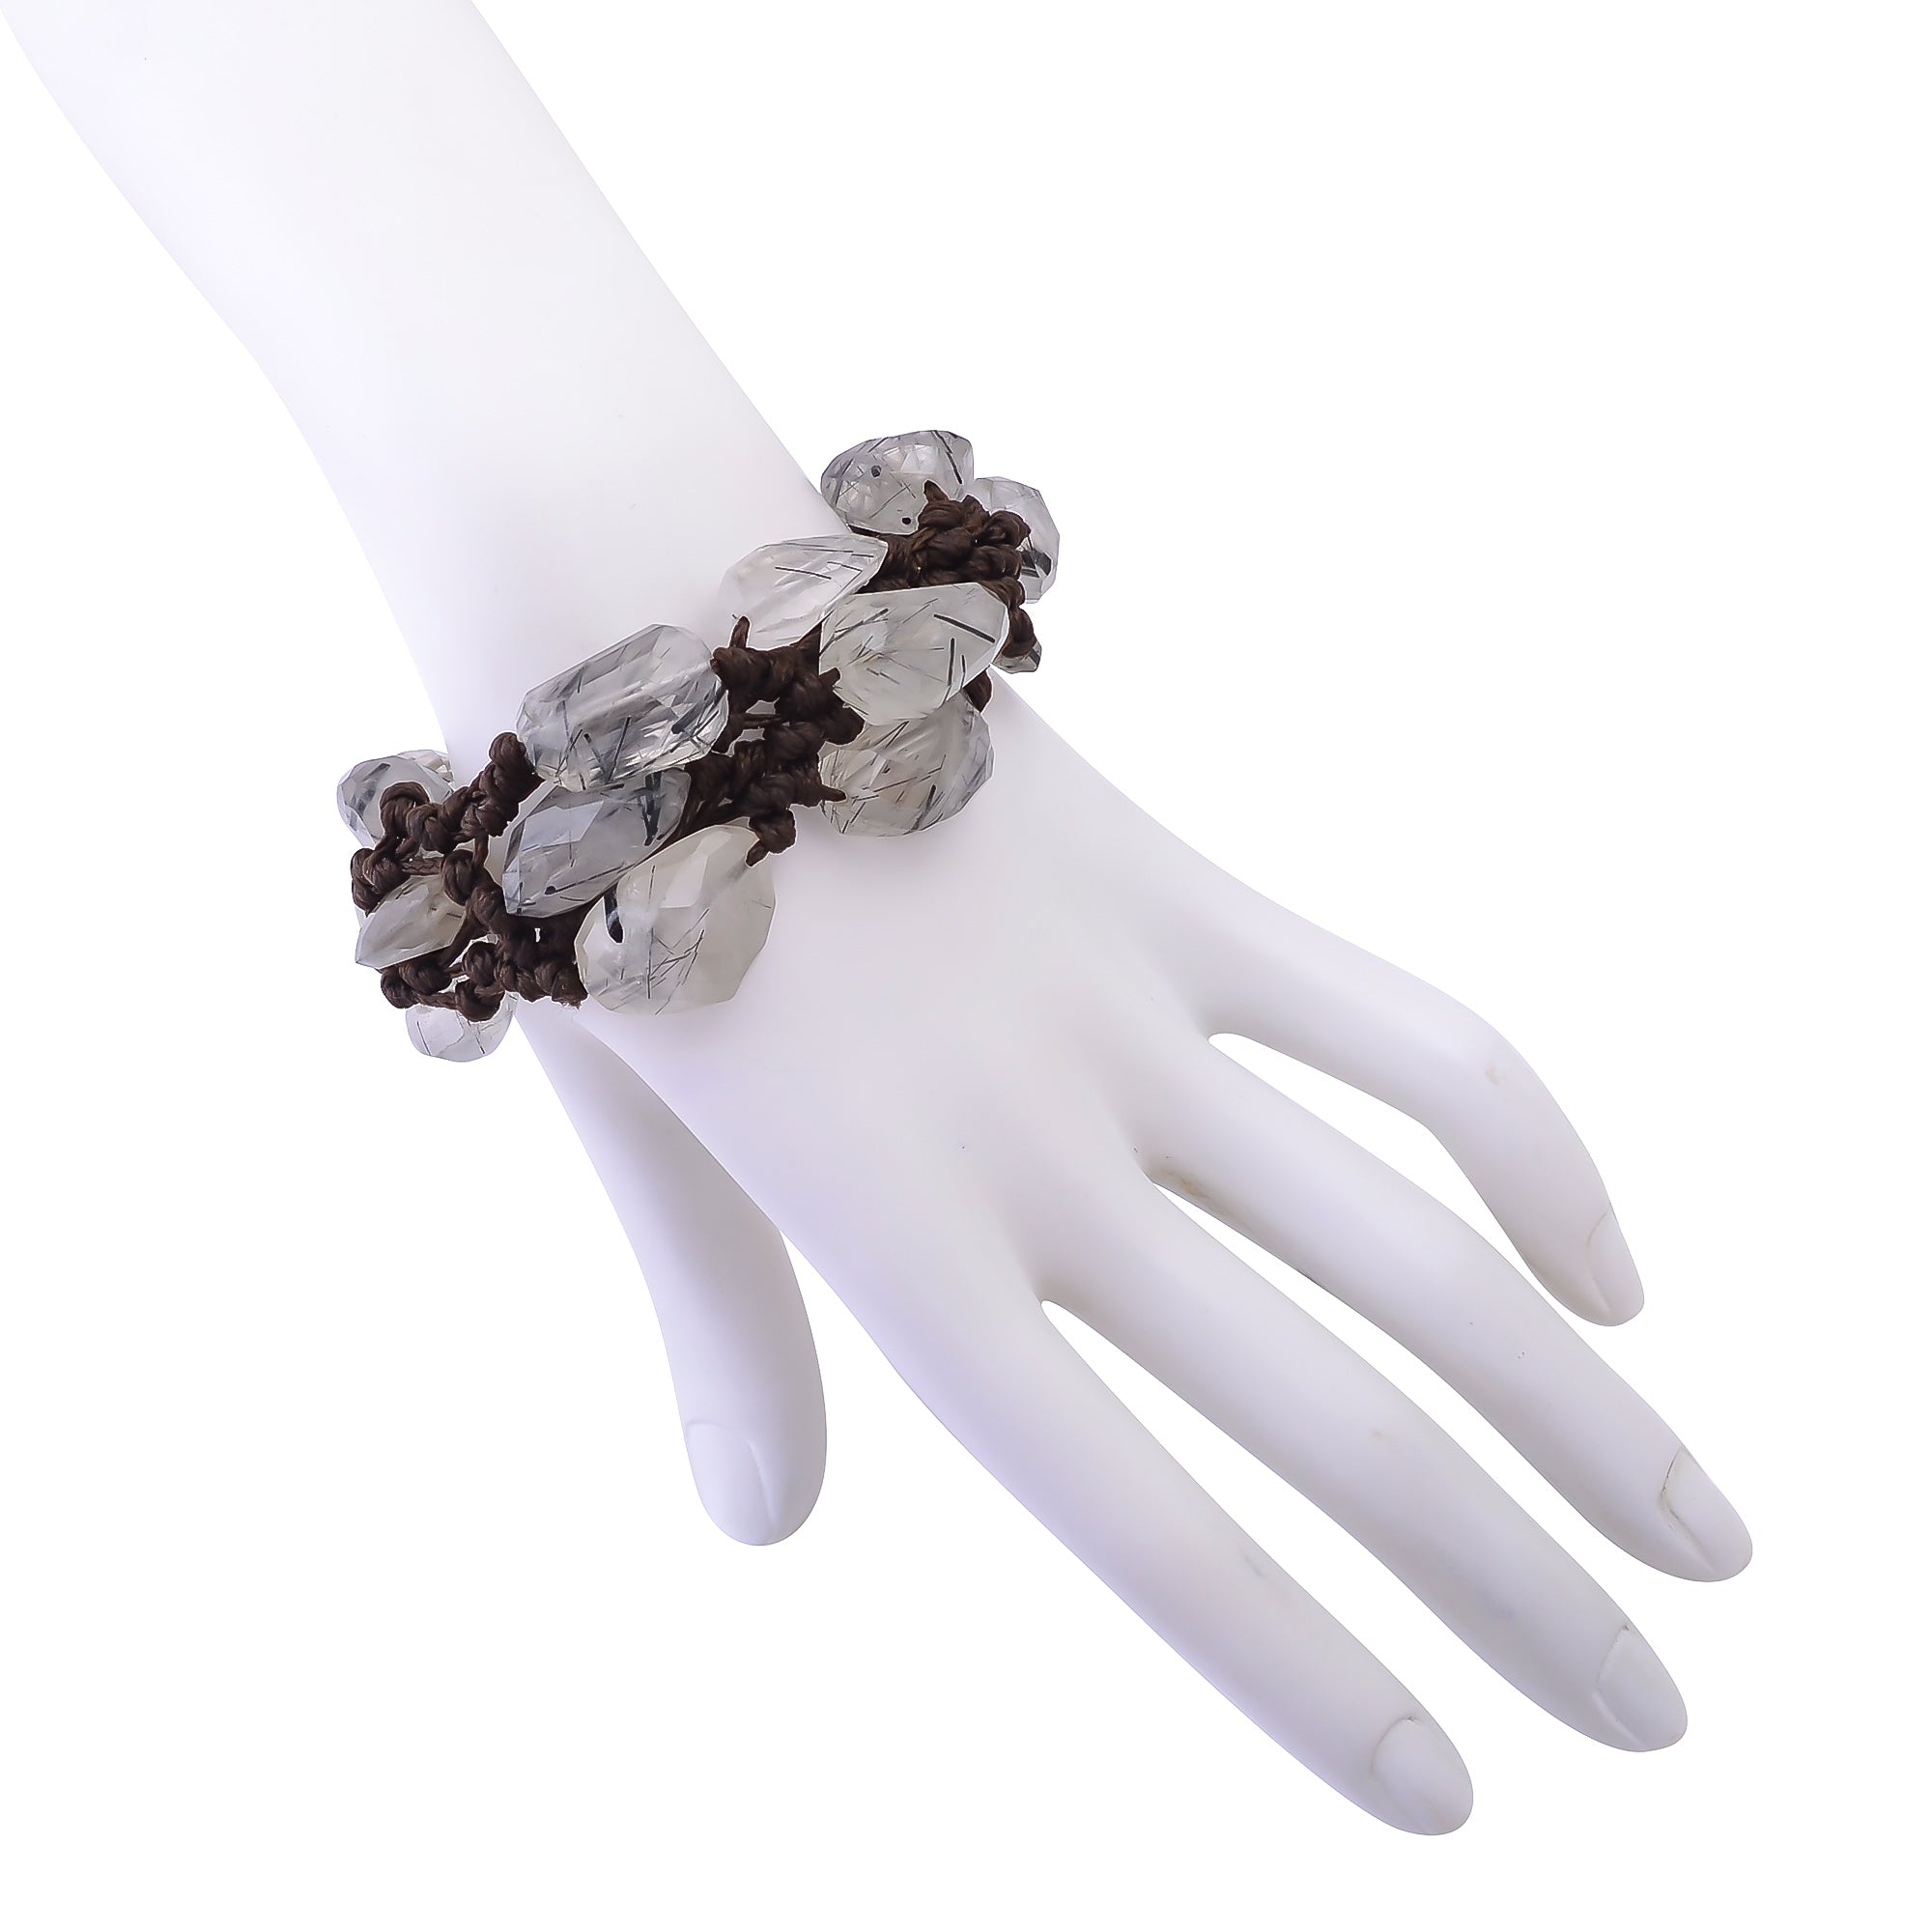 Buy Handcrafted Silver Rutile Thread Weaving Bracelet